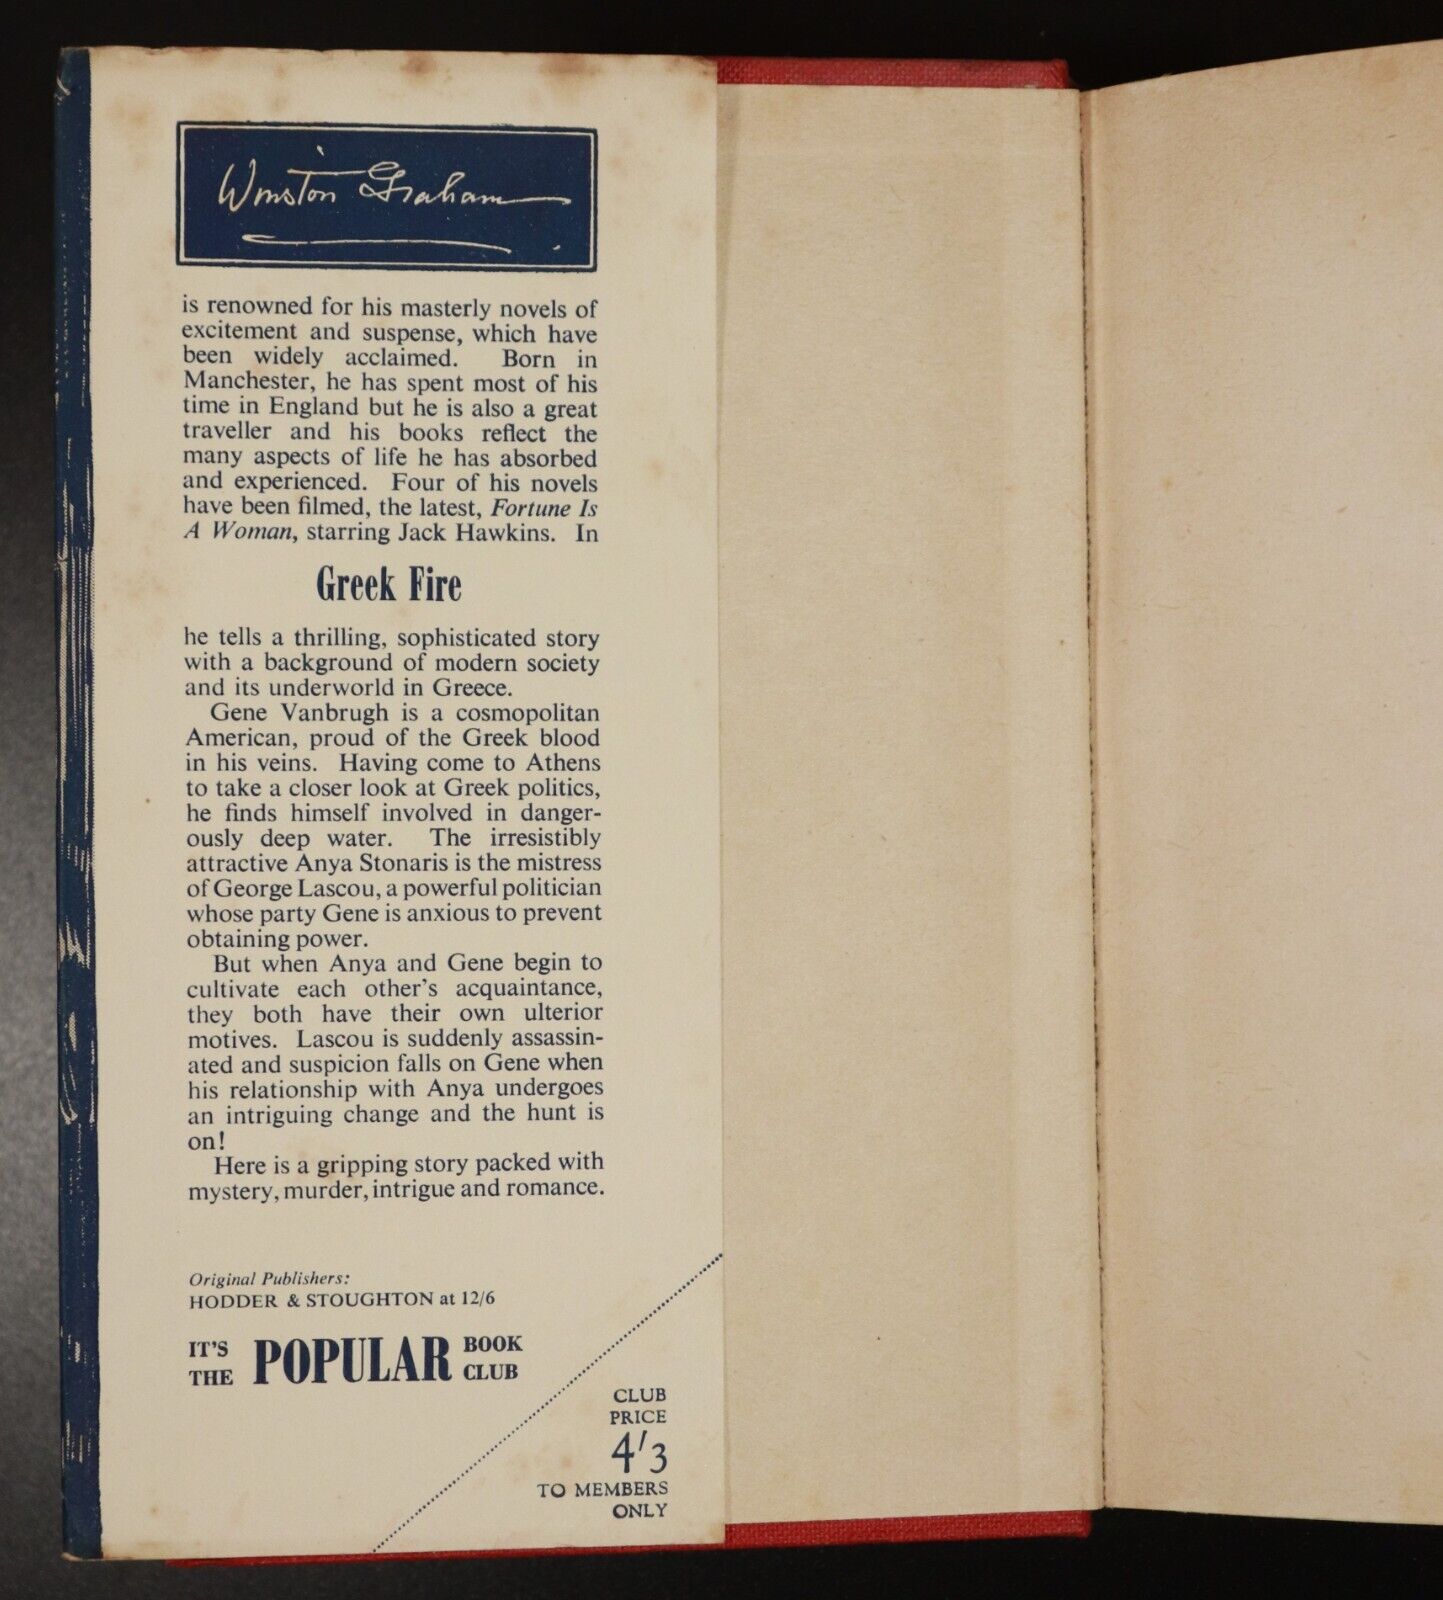 1957 Greek Fire by Winston Graham Vintage British Fiction Book - 0